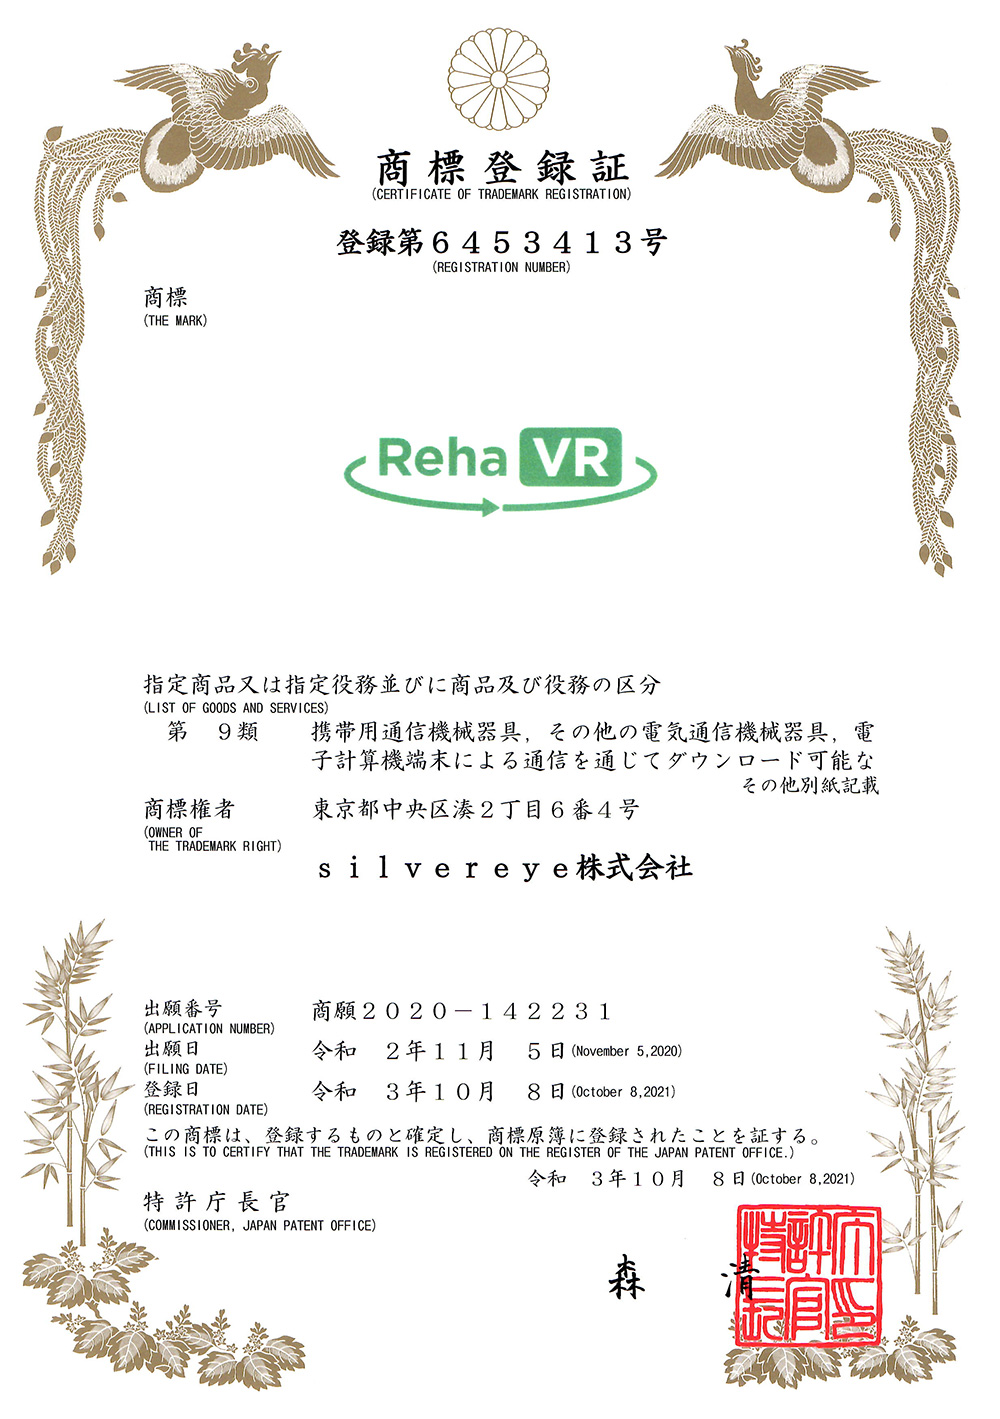 RehaVR 商標登録証のイメージ画像